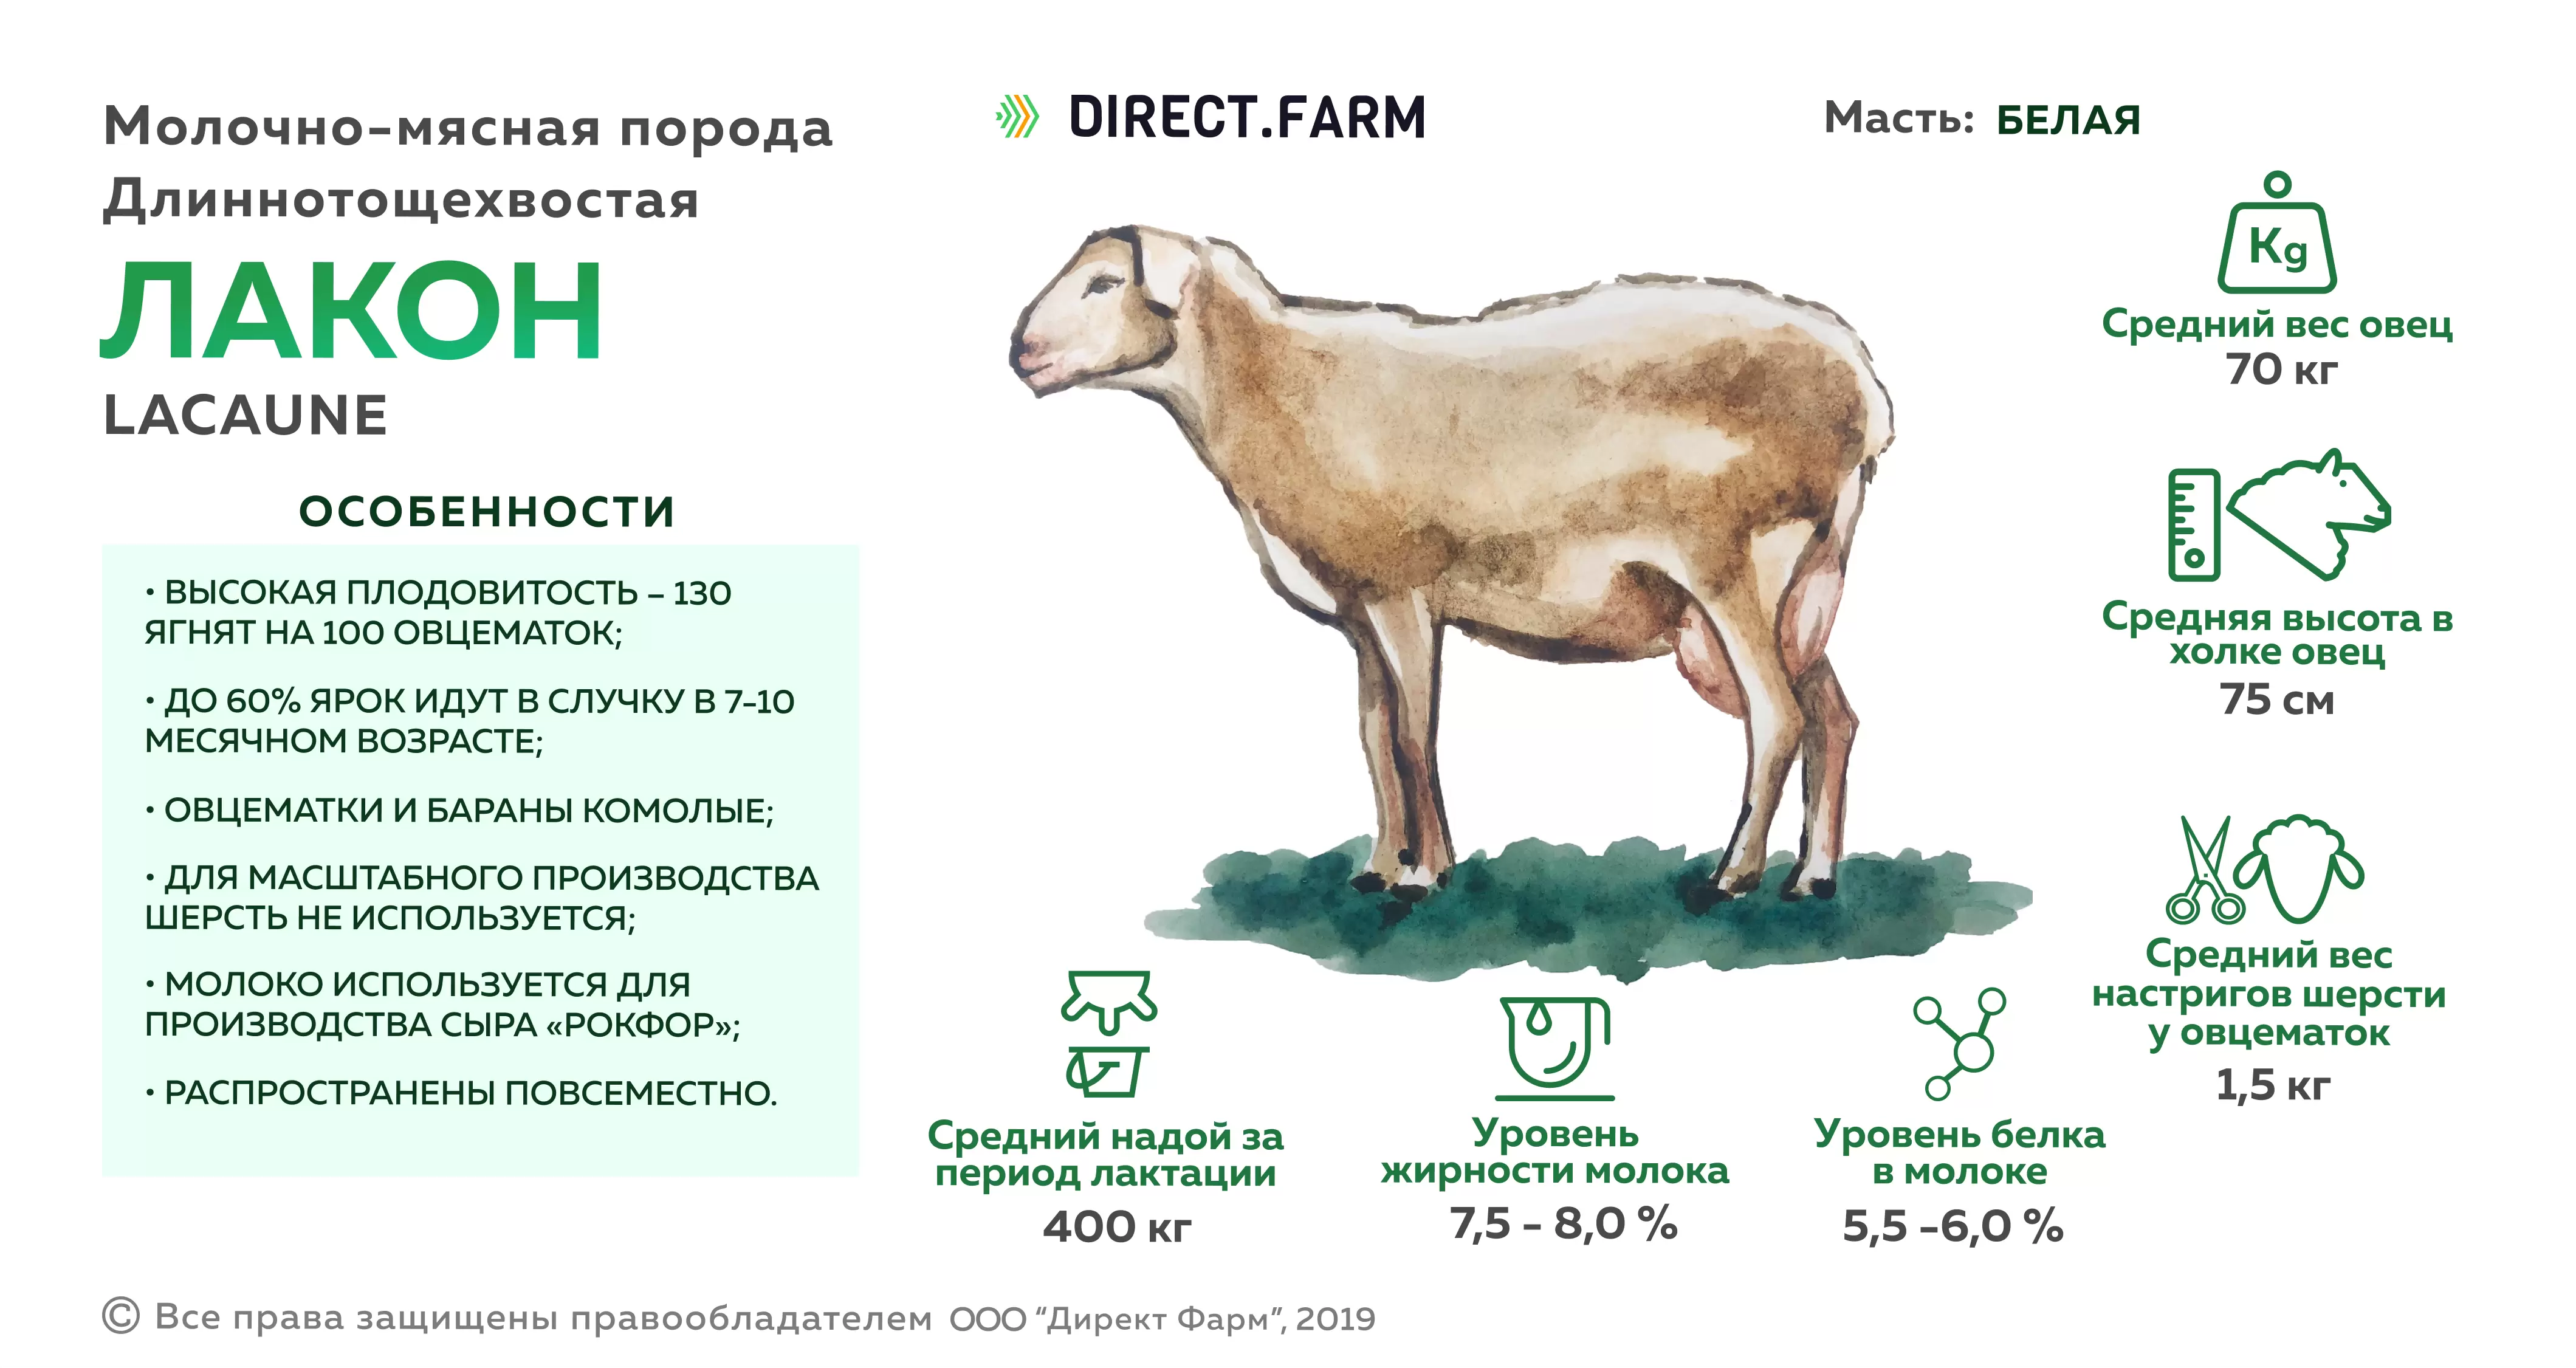 Порода лакон молочная порода овец. Молочная порода овец Ассаф. Лакон порода овец характеристика. Лакон порода Баранов. Сколько вес барана